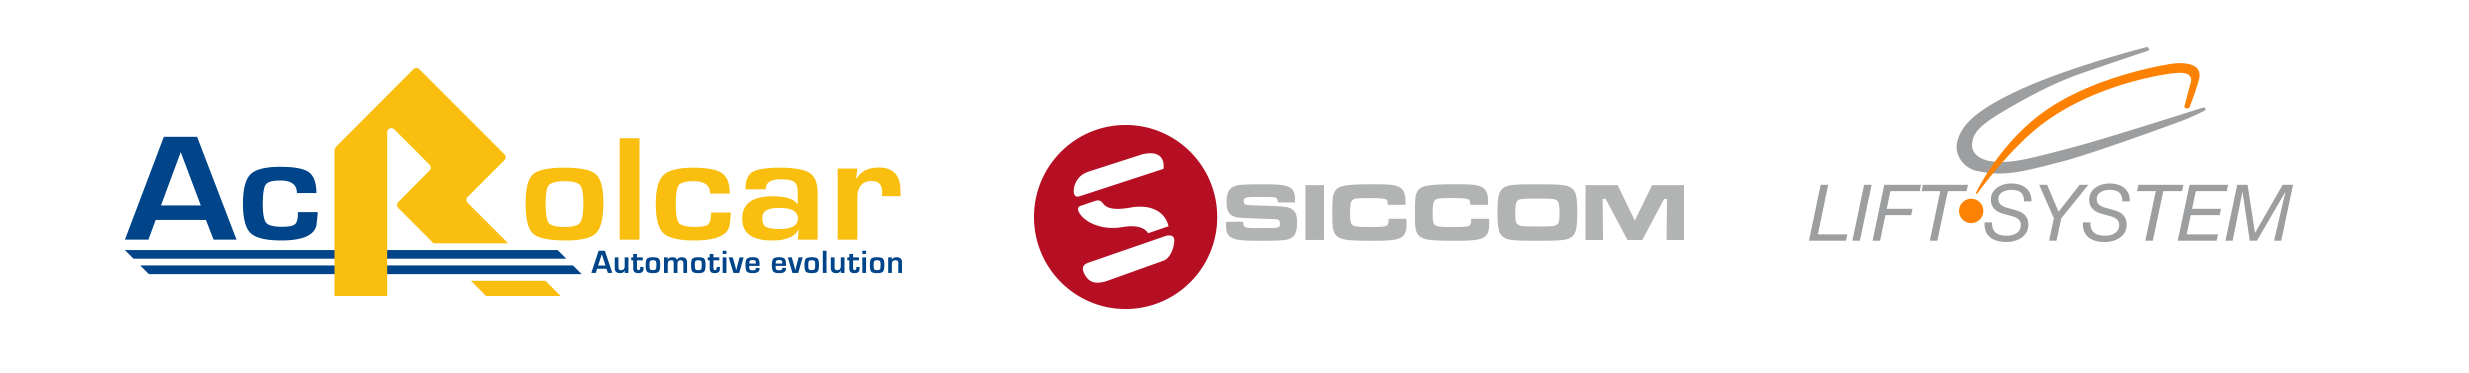 Ac Rolcar Siccom Liftsystem brands